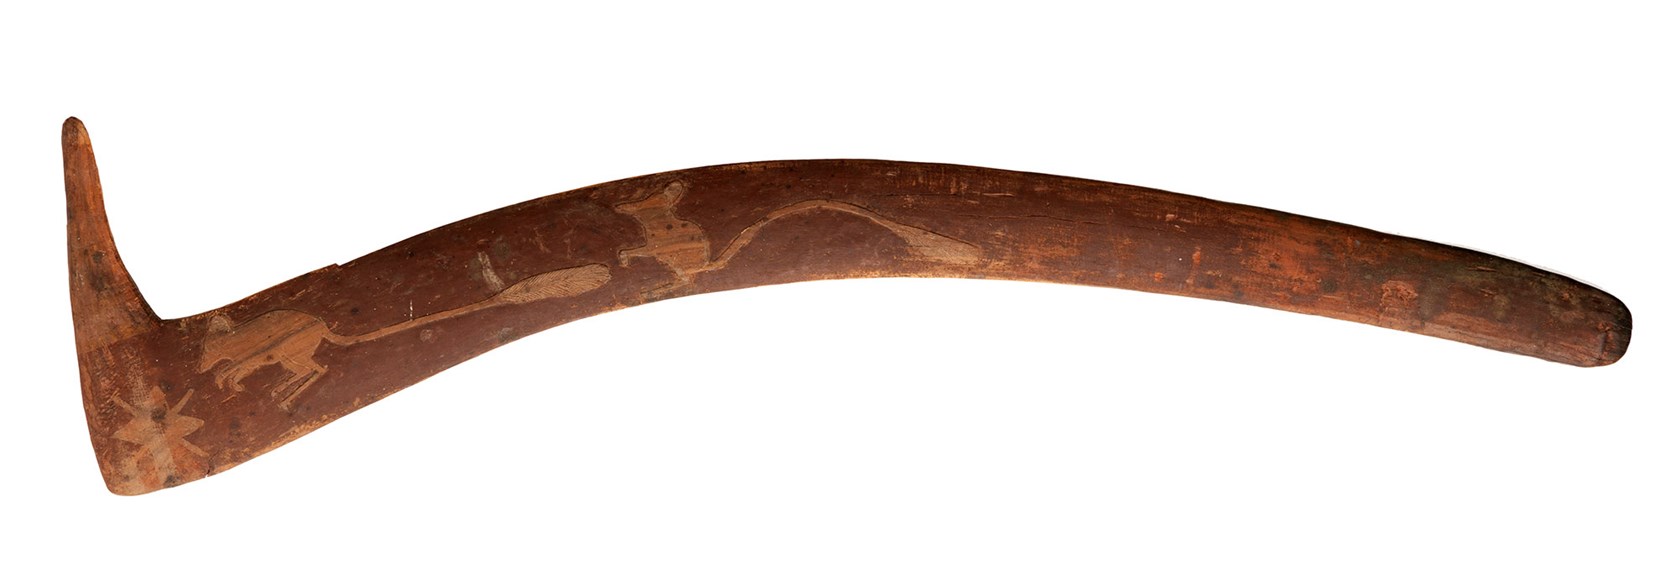 decorated boomerang